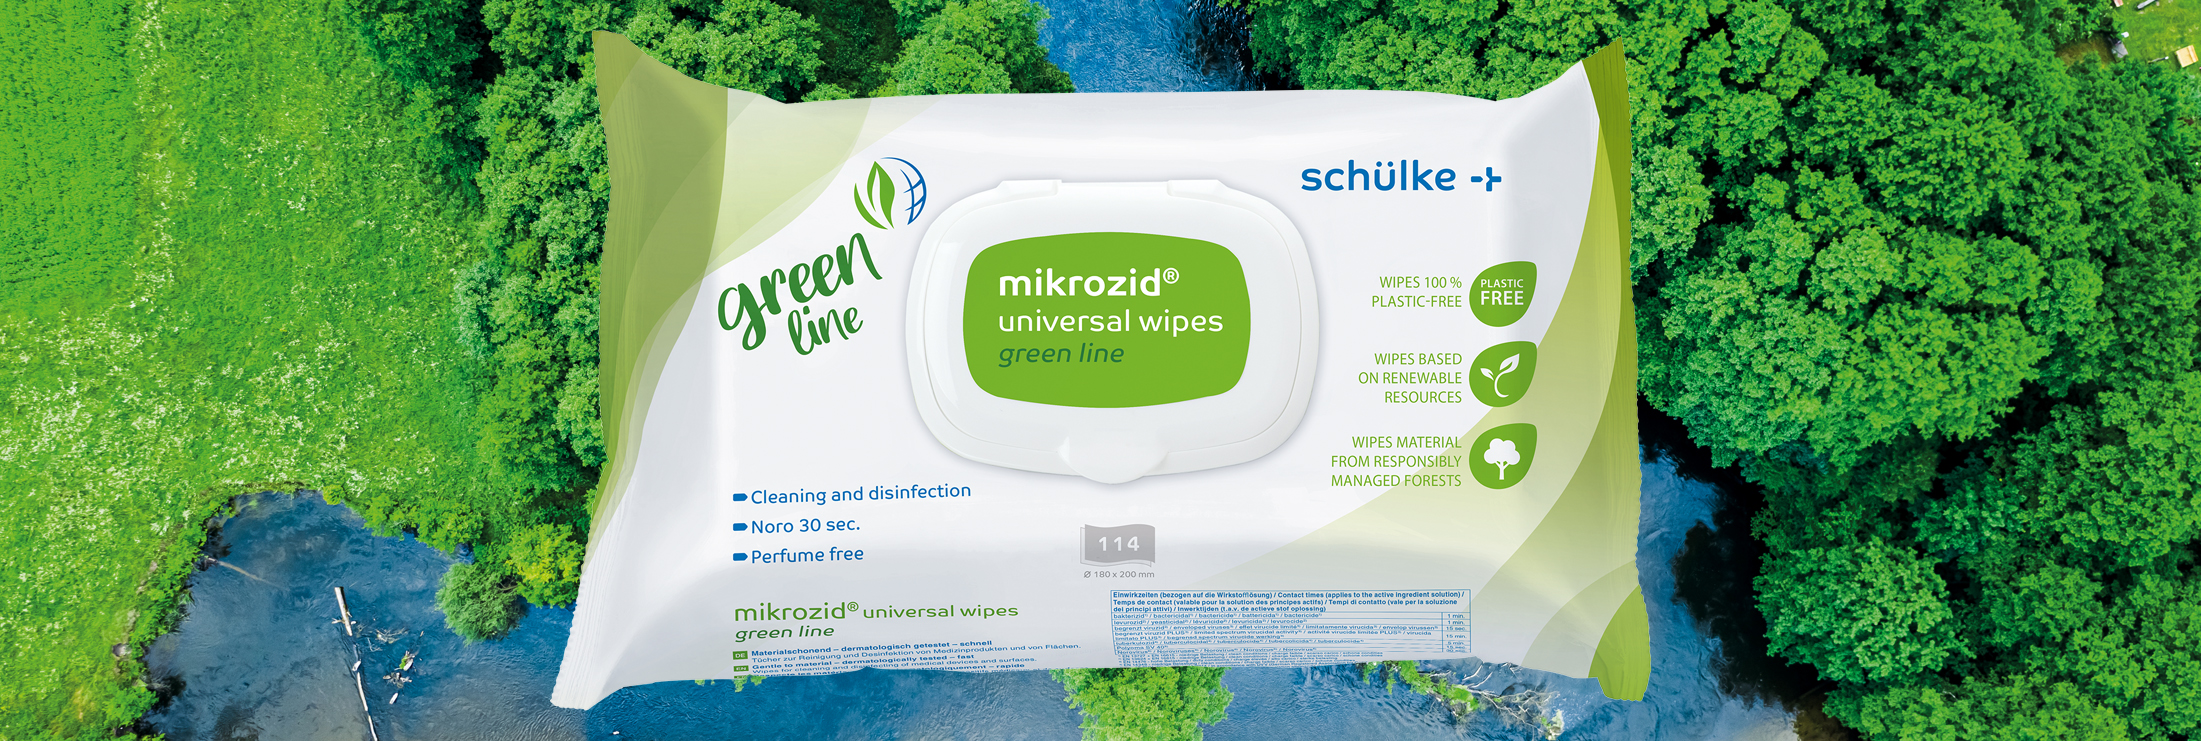 mikrozid universal wipes green line Headerbild.jpg